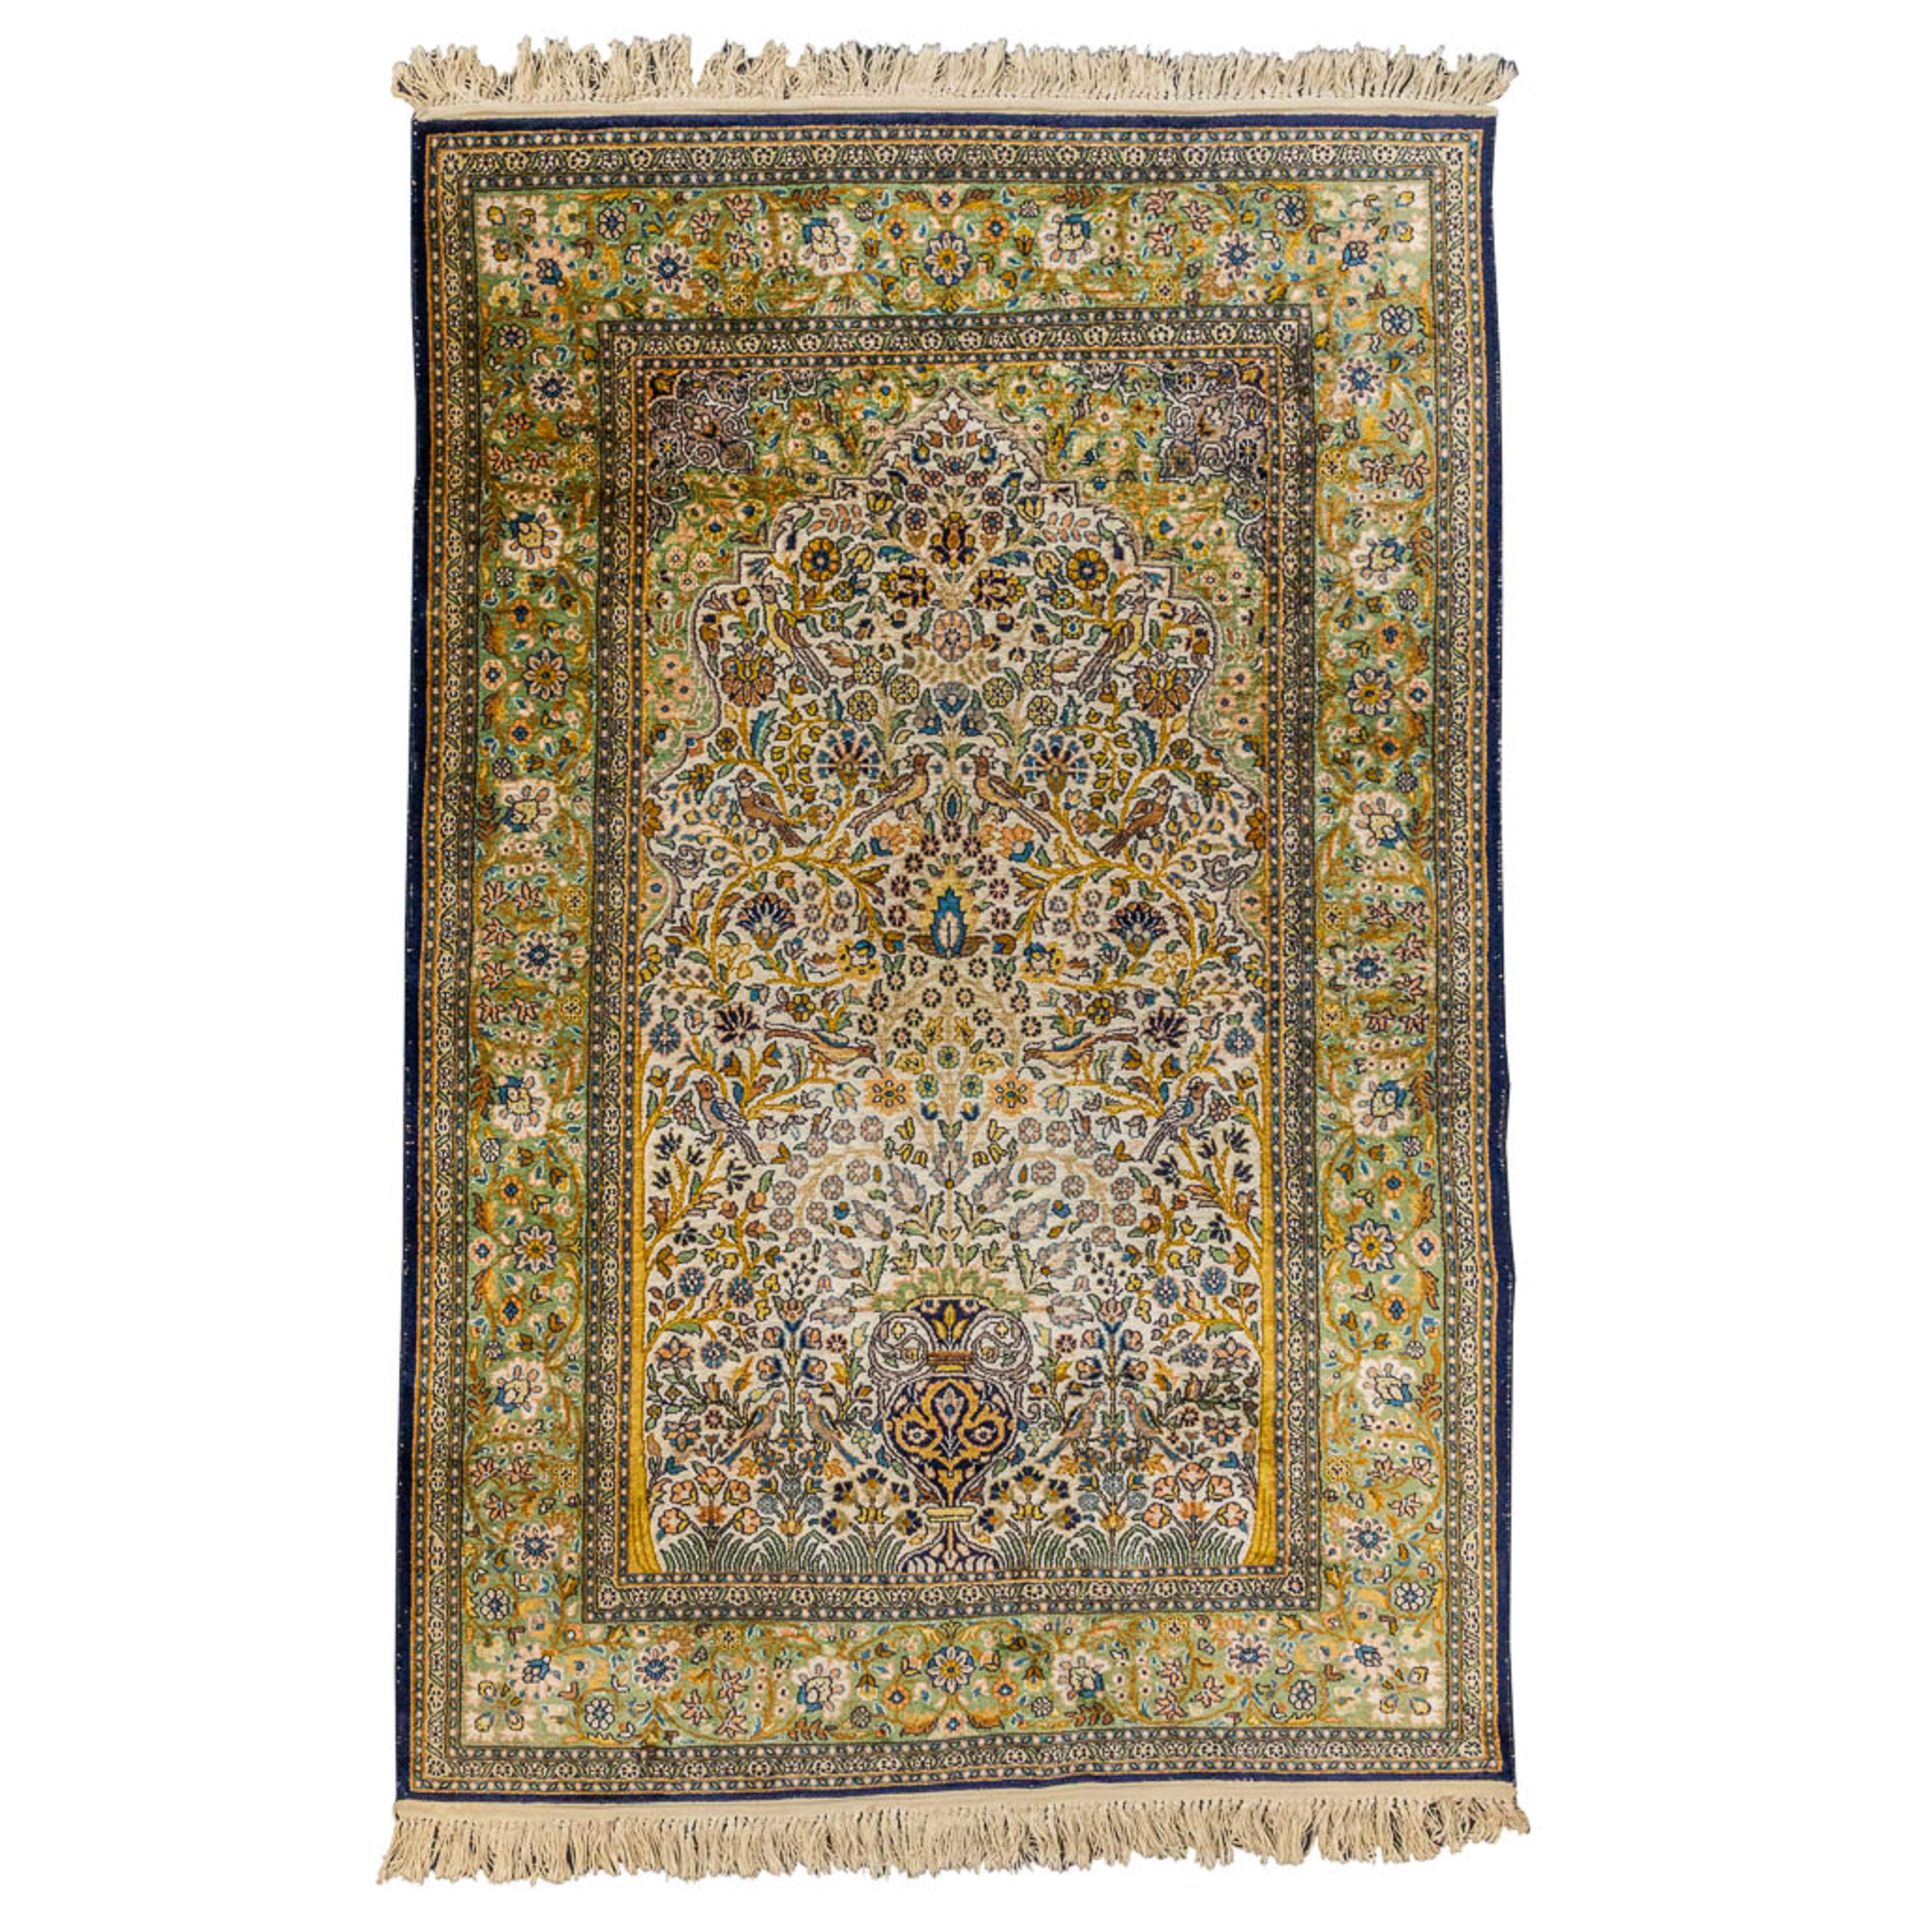 An Oriental, hand-made carpet, 'Isfahan' 181 x 124